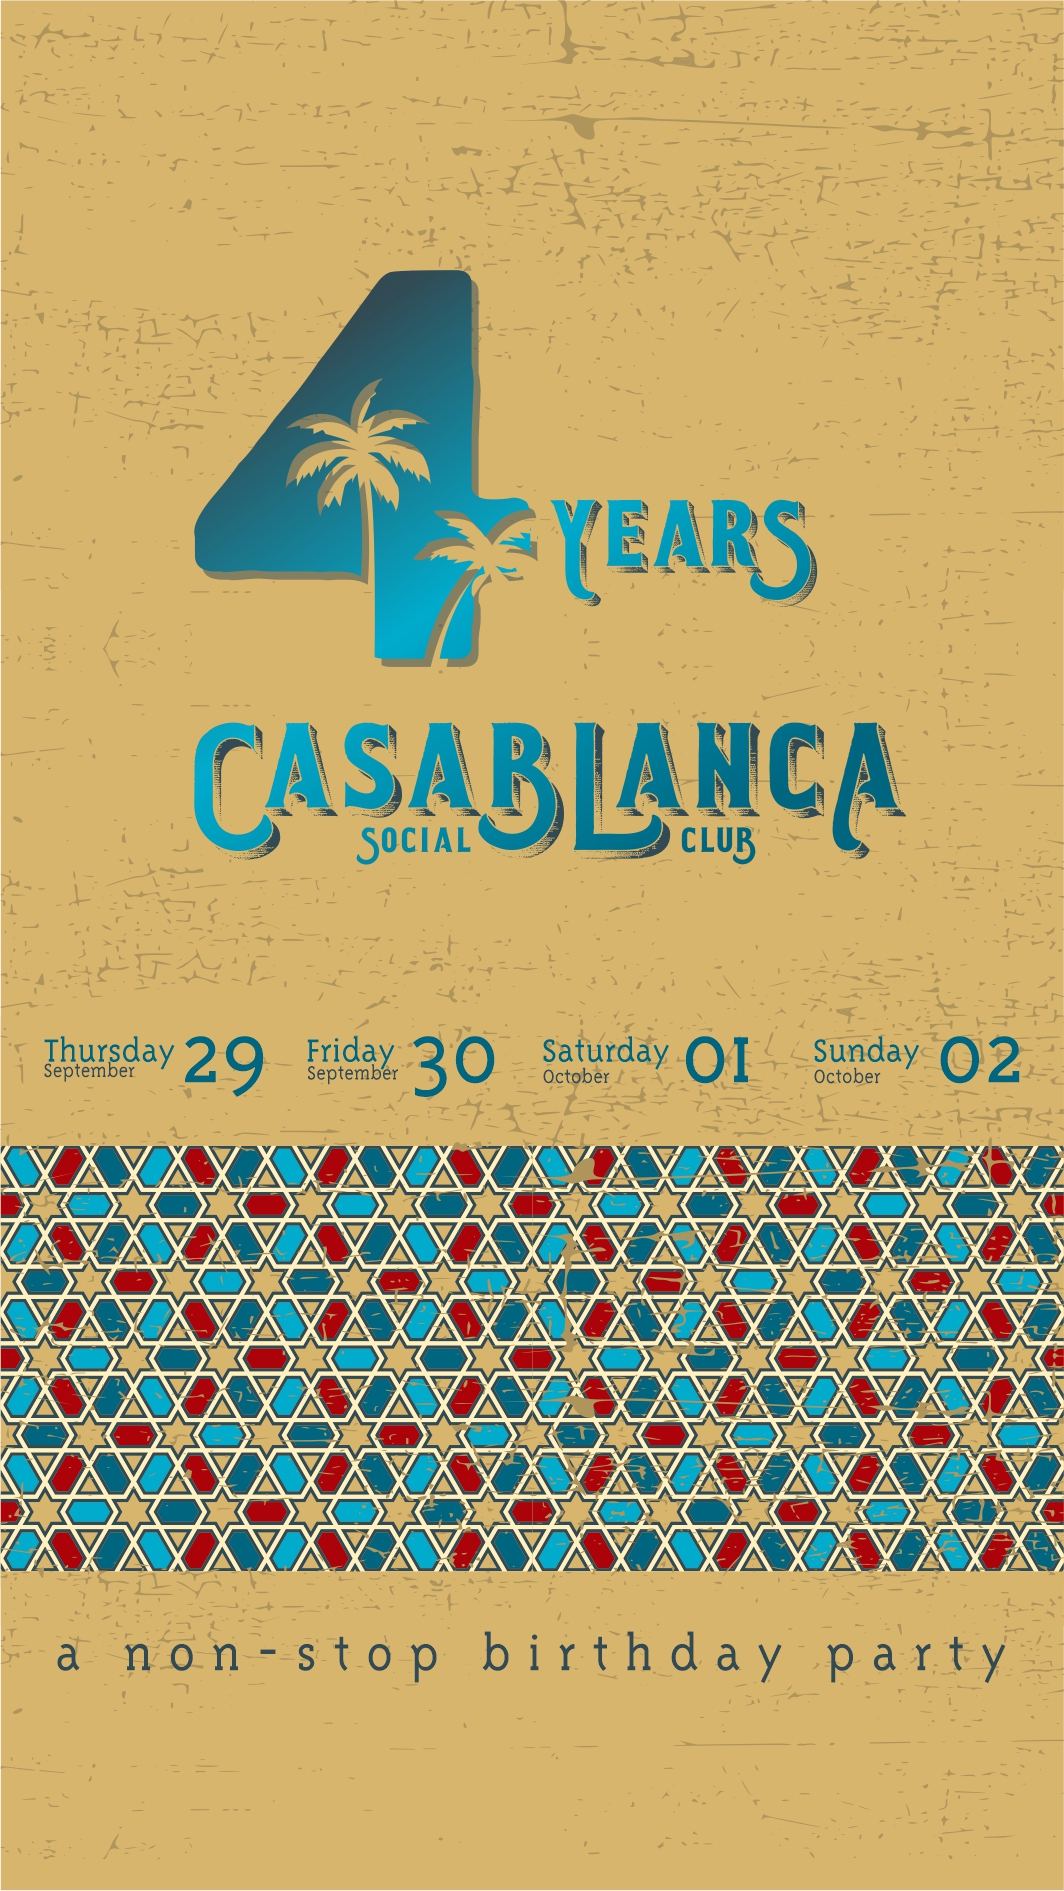 Casablanca social club 4years